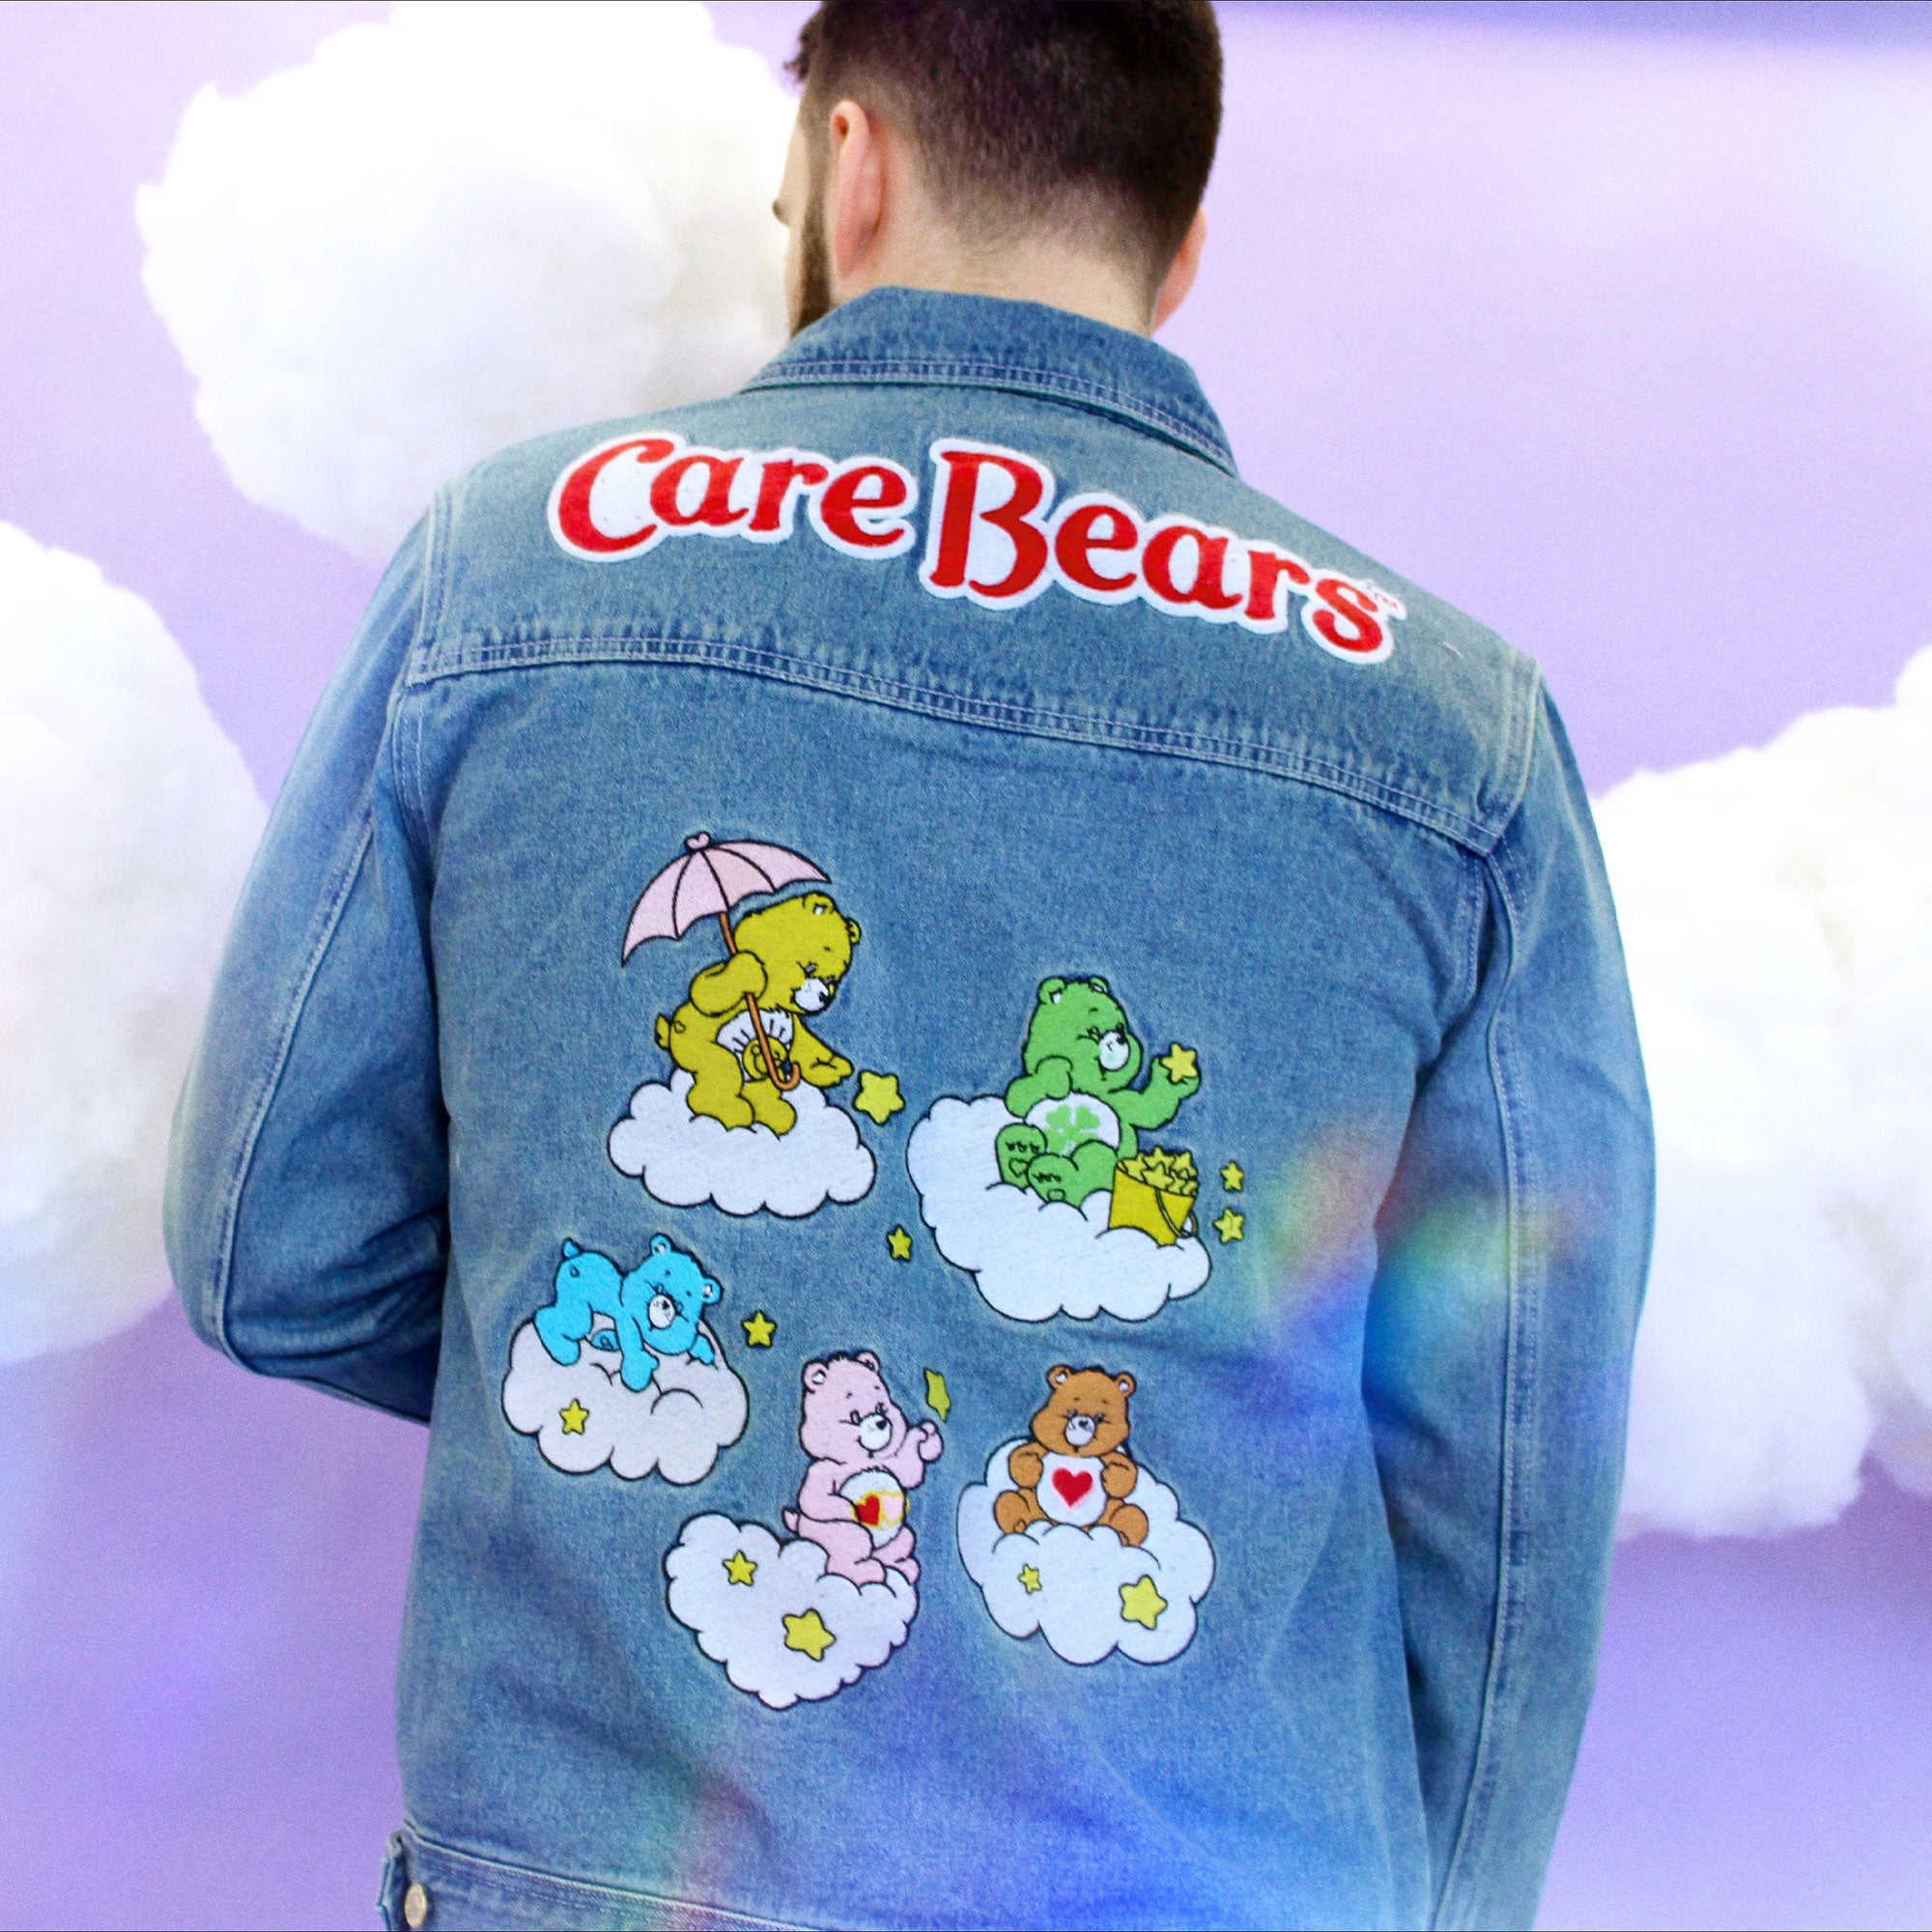 Care Bears Denim Jacket - Cakeworthy